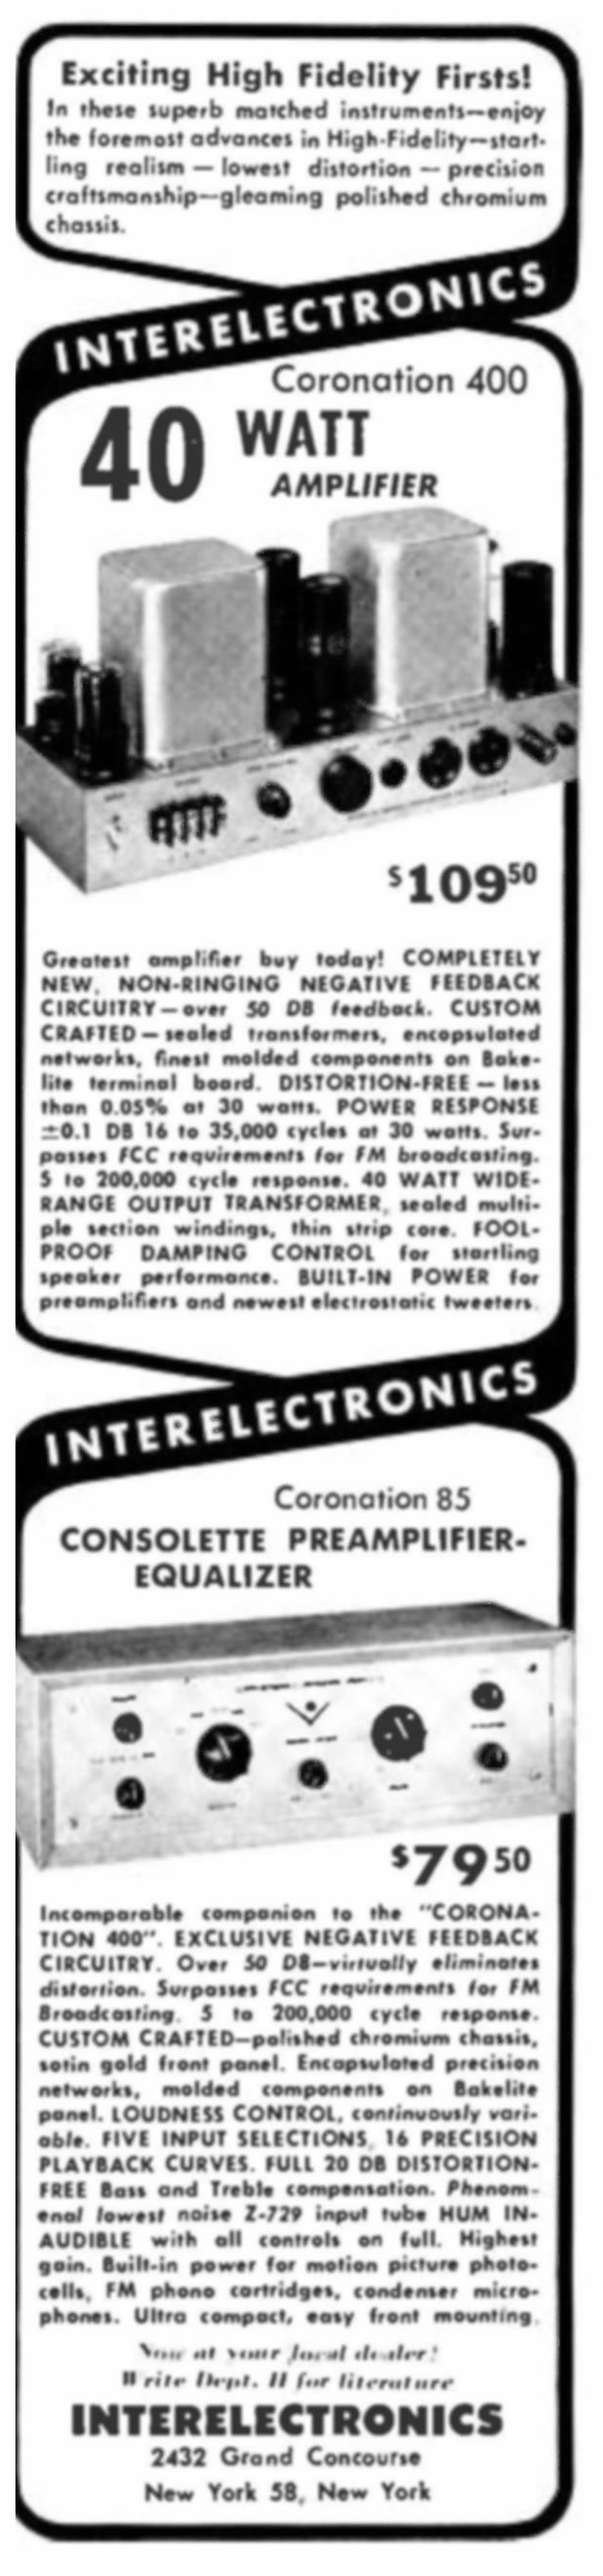 Interelectronics 1956 0.jpg